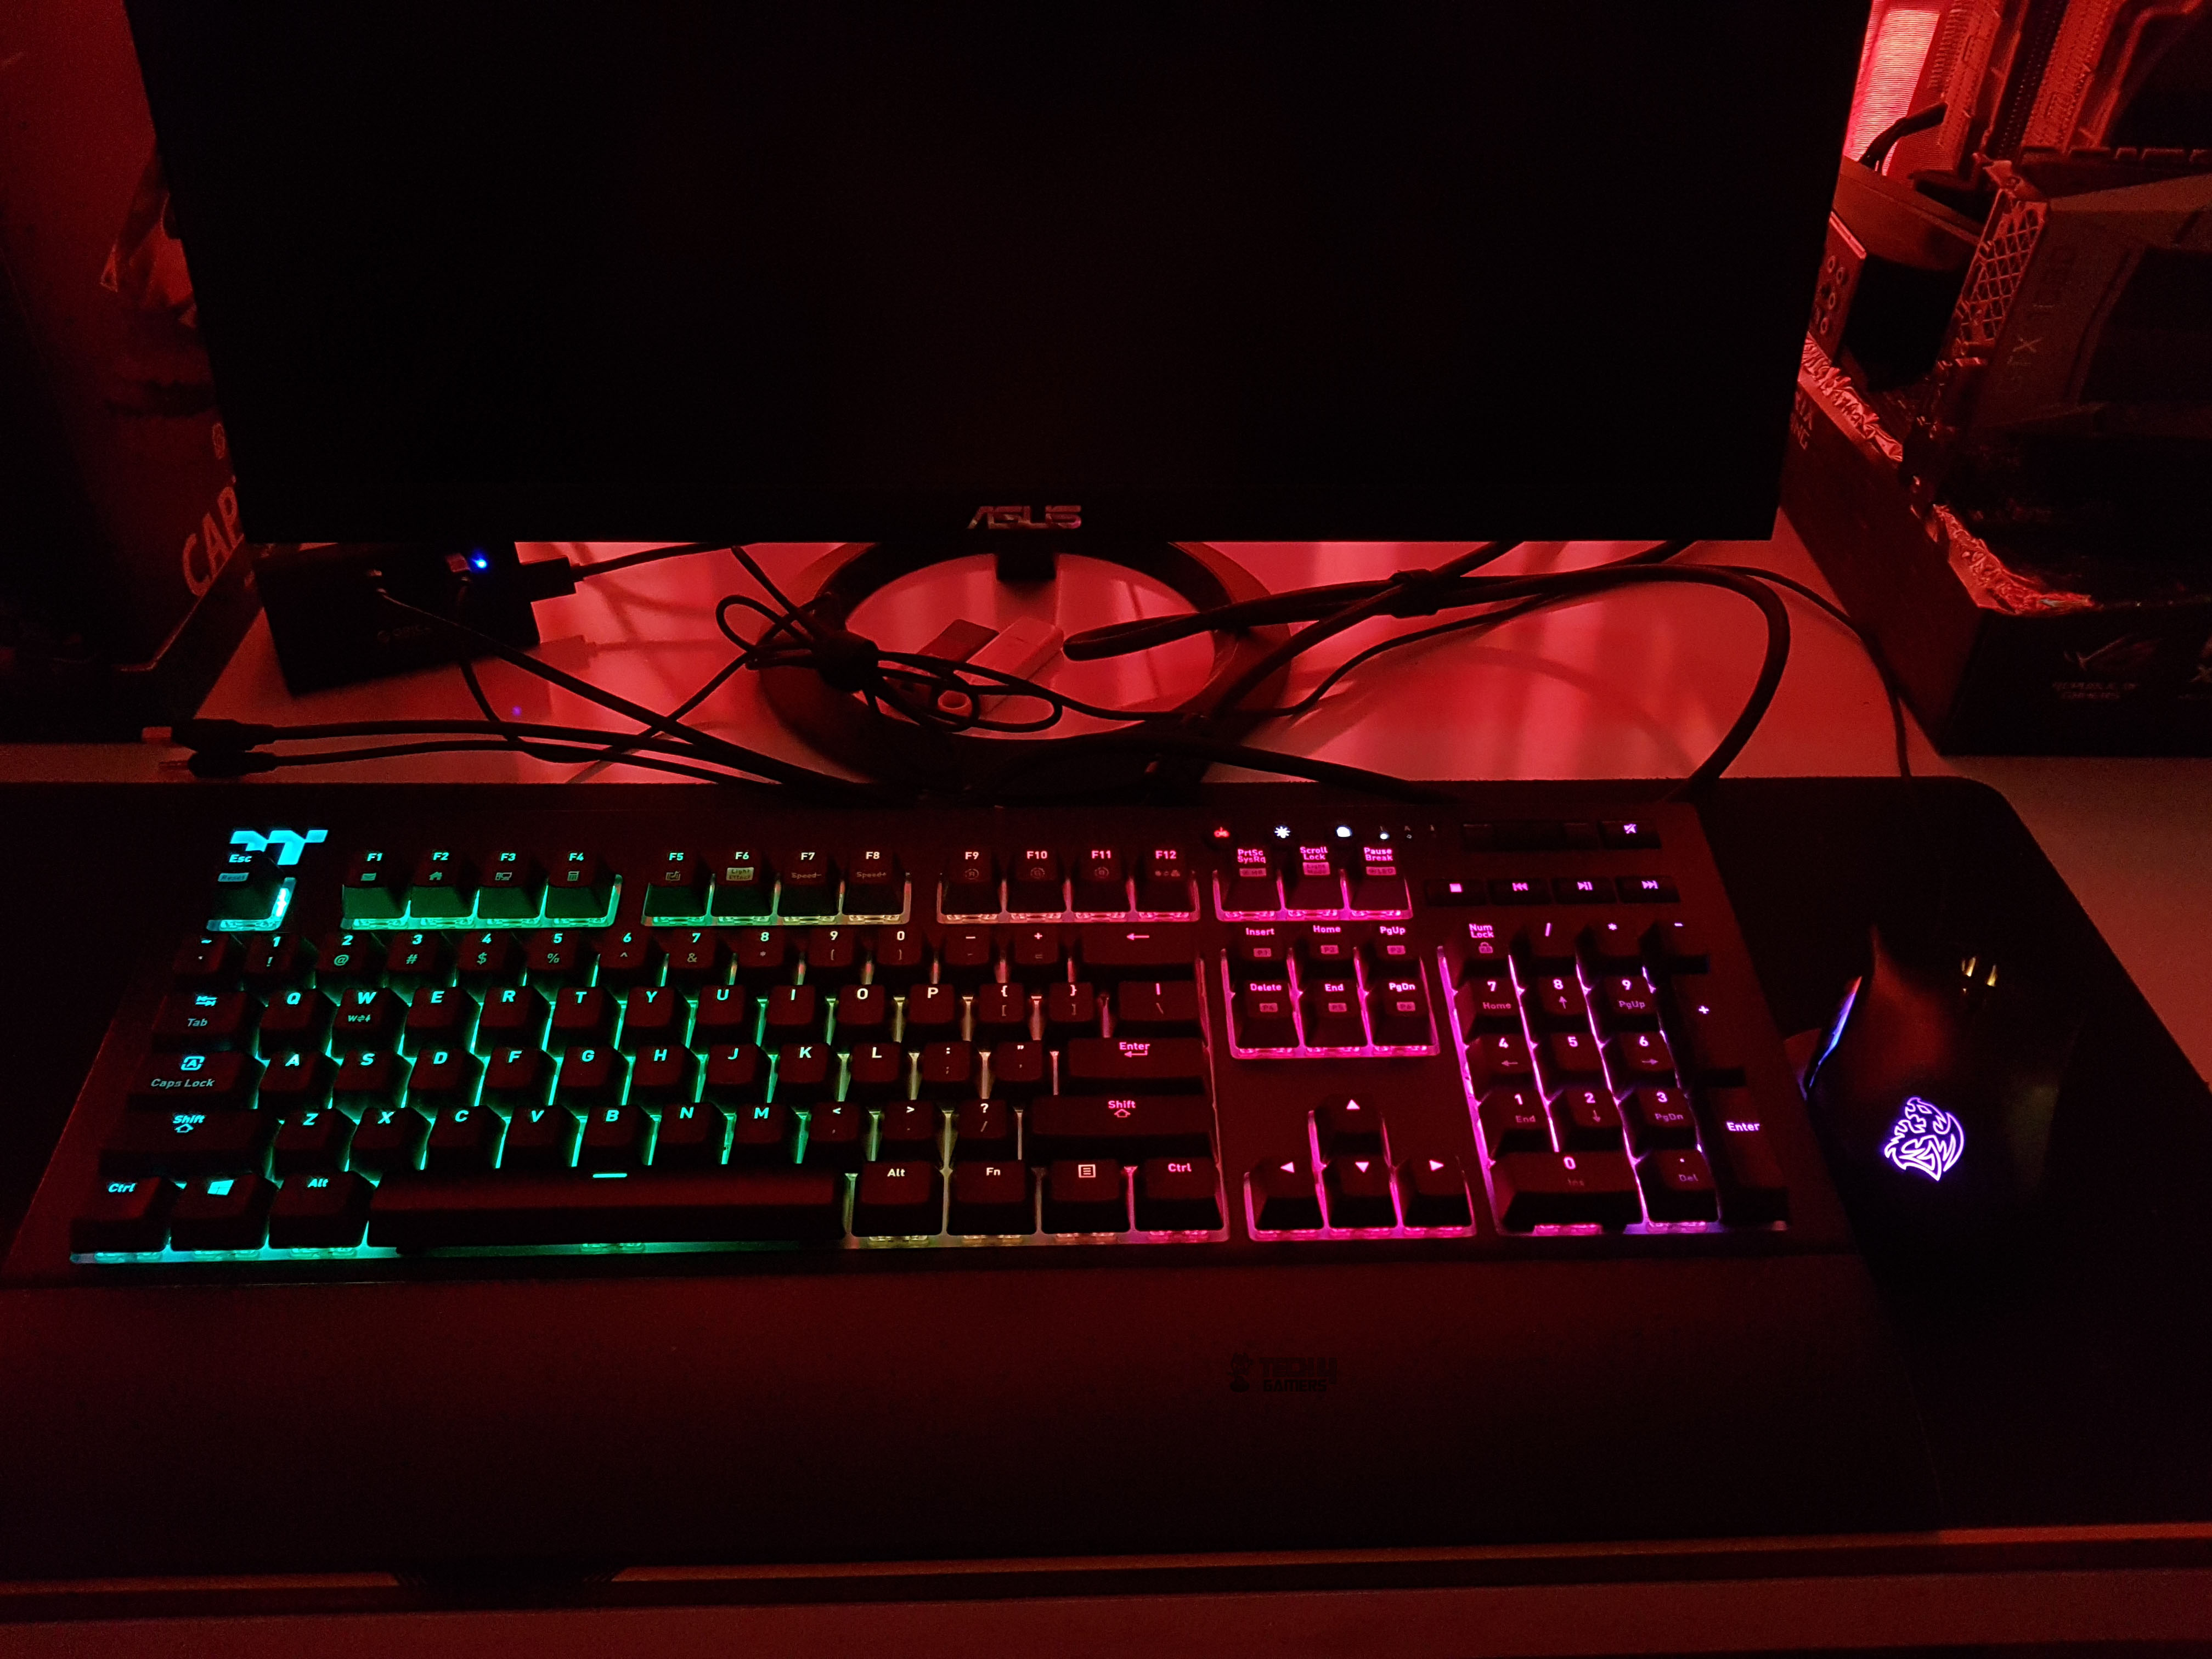 TT keyboard RGB Lighting